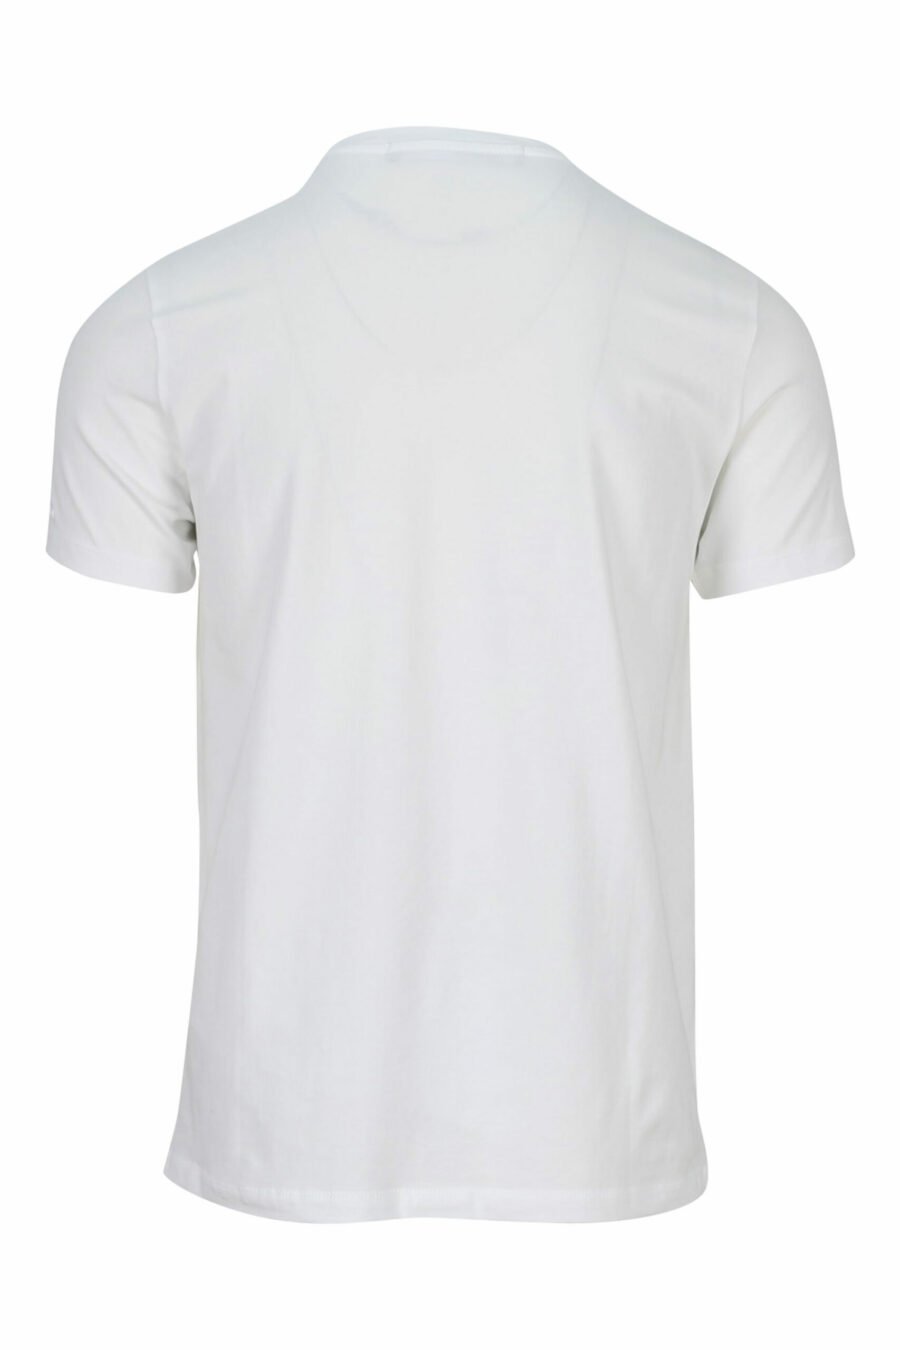 Camiseta blanca con maxilogo "karl silueta" multicolor - 4062226400701 scaled